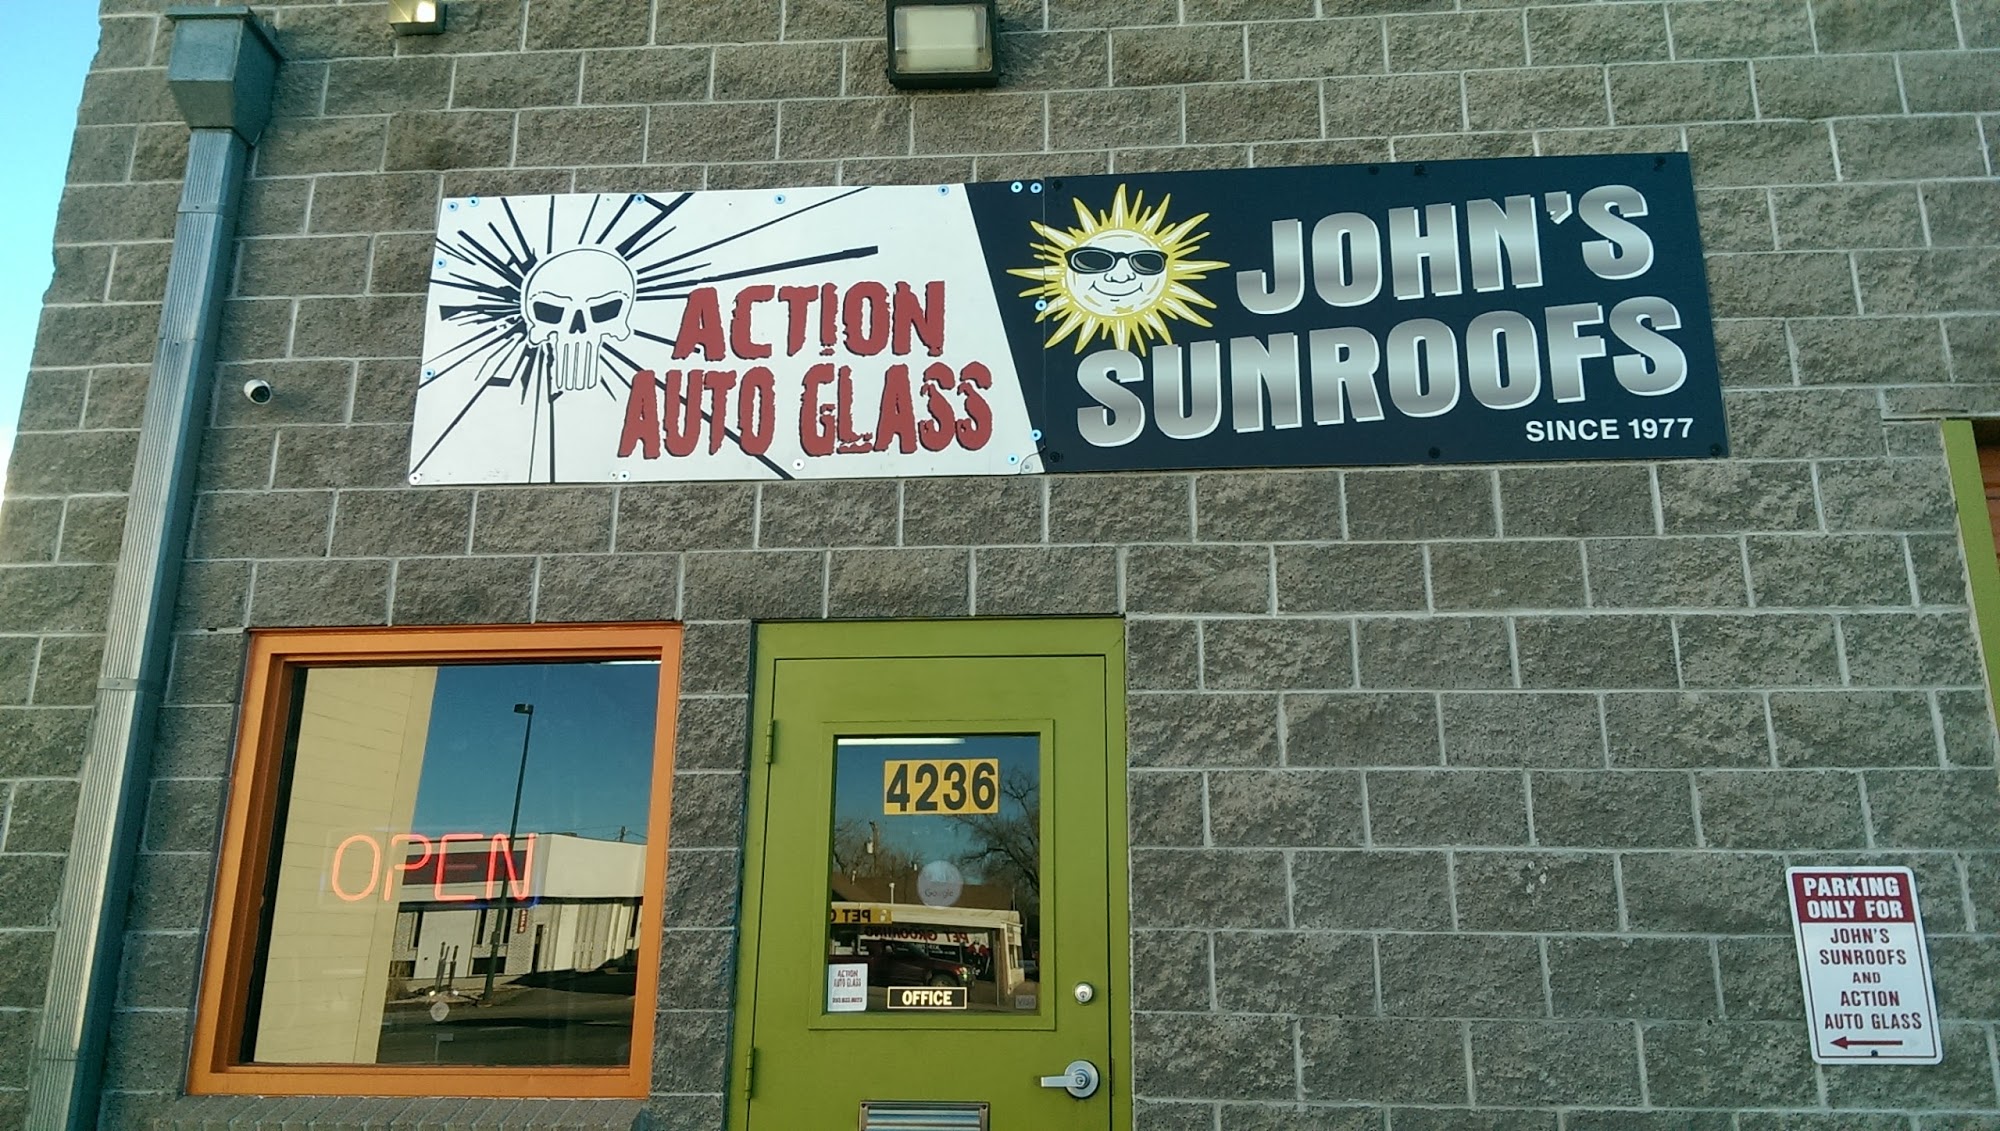 John's Sunroofs